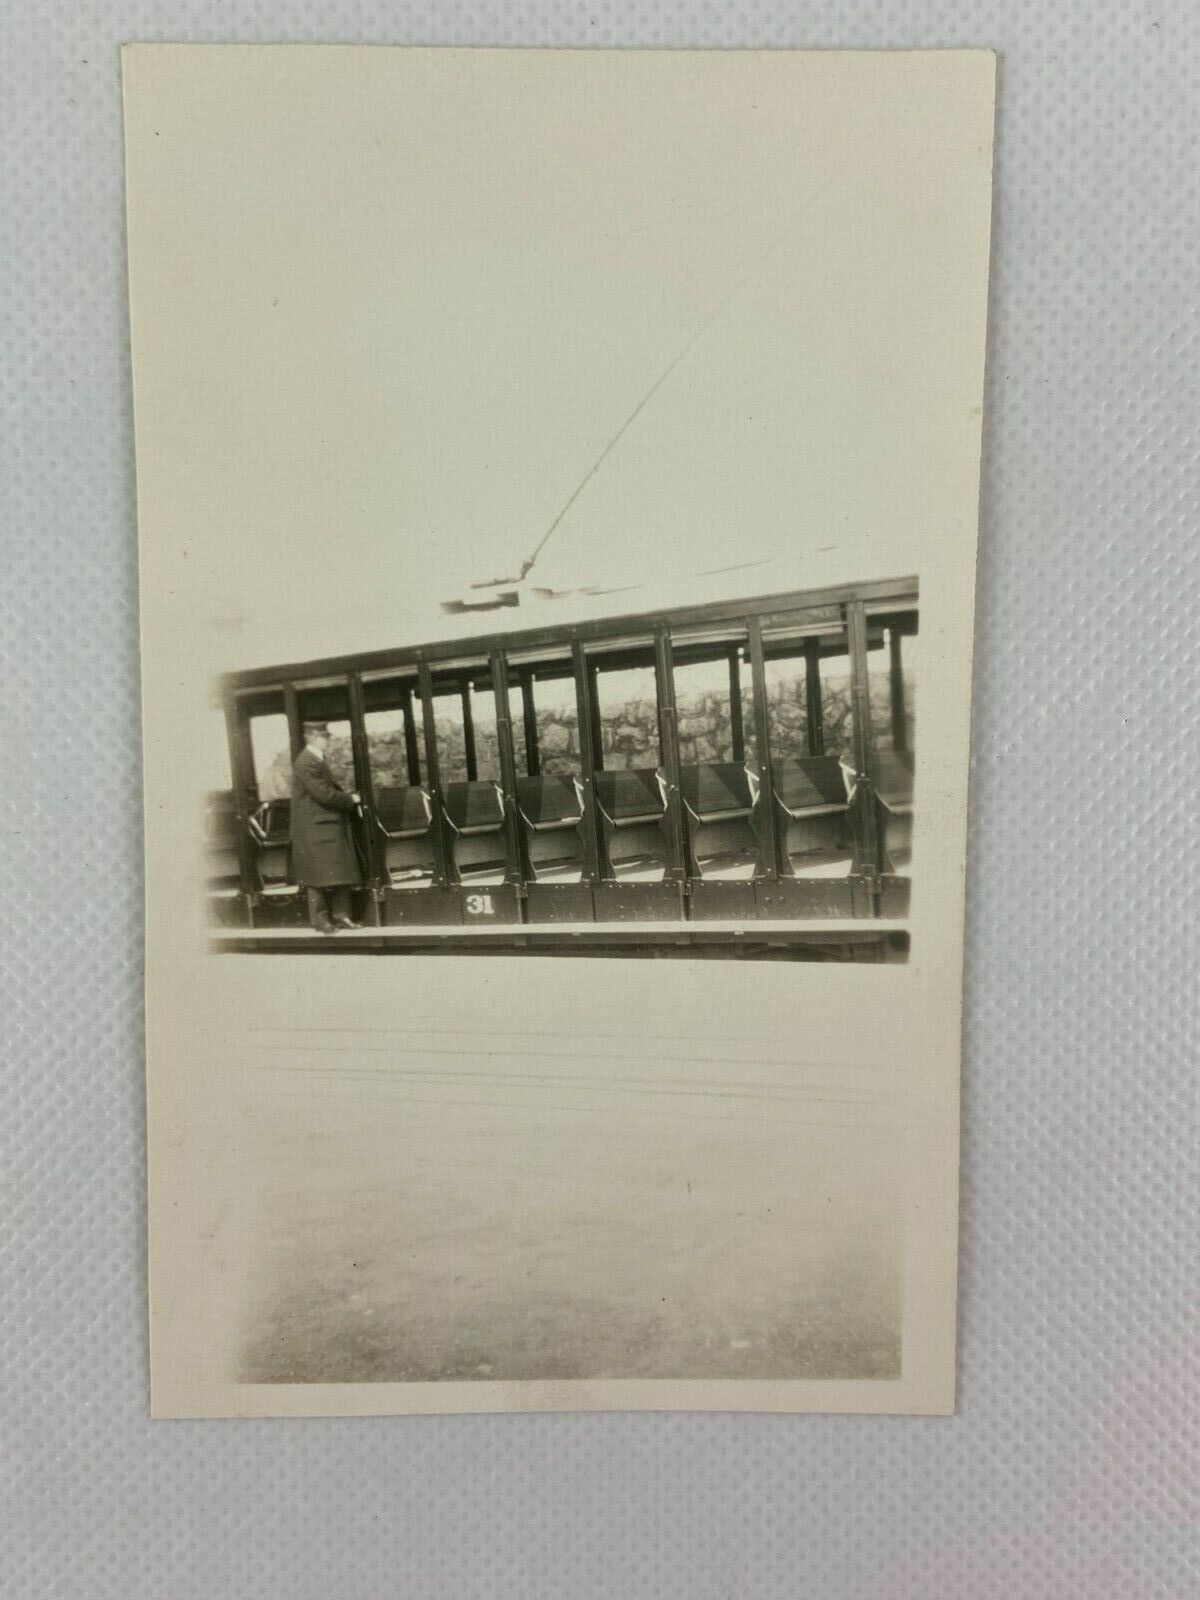 Electric Street Trolley Car Steward Vintage B&W Photograph Snapshot 2.75 x 4.5